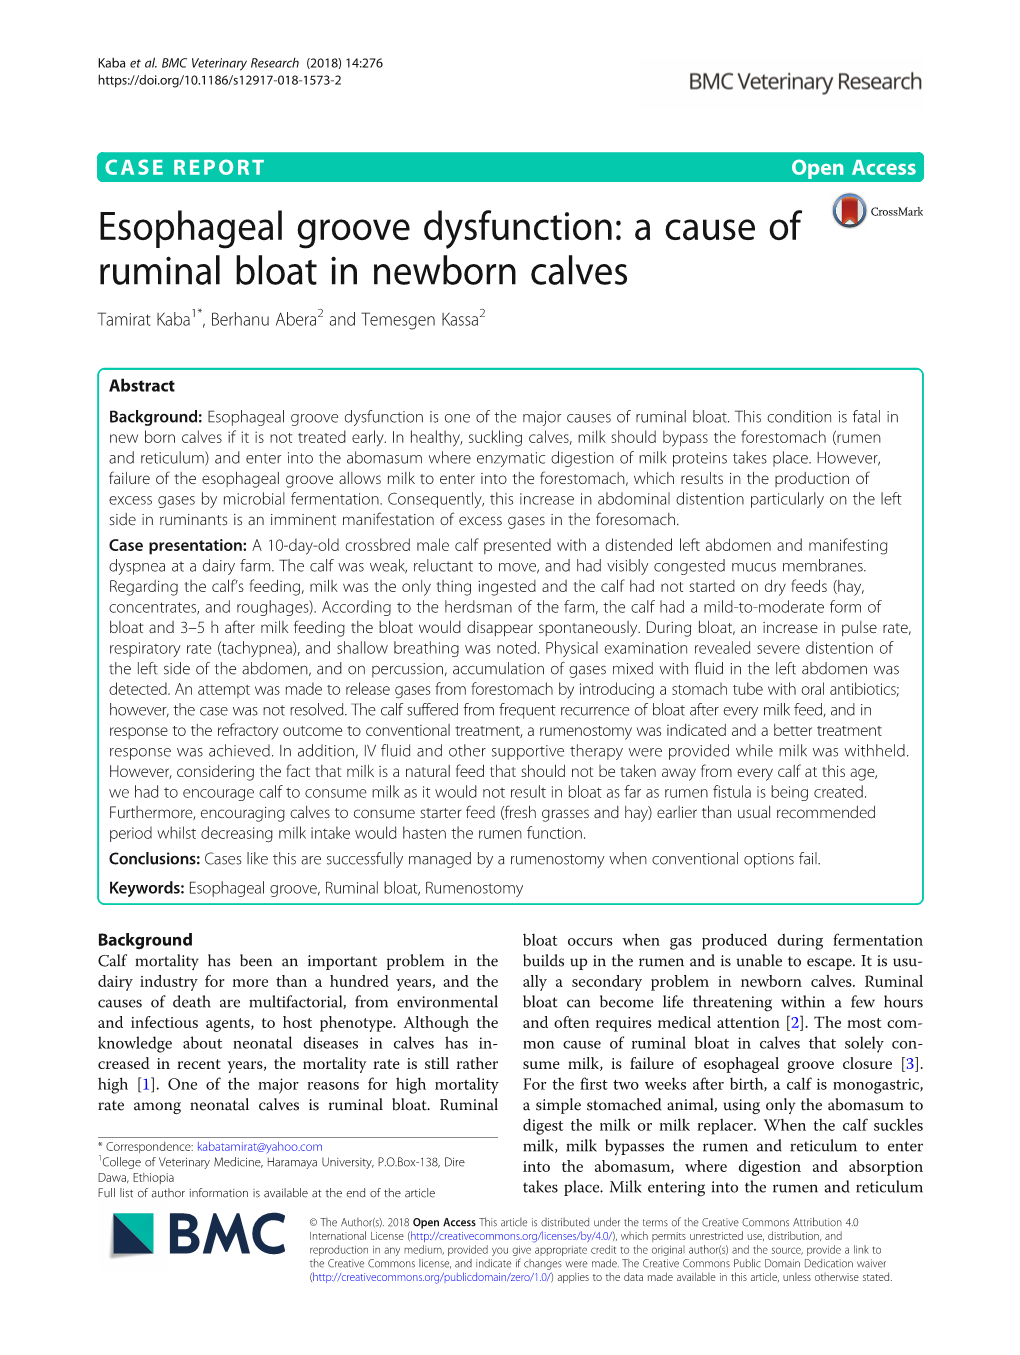 Esophageal Groove Dysfunction: a Cause of Ruminal Bloat in Newborn Calves Tamirat Kaba1*, Berhanu Abera2 and Temesgen Kassa2